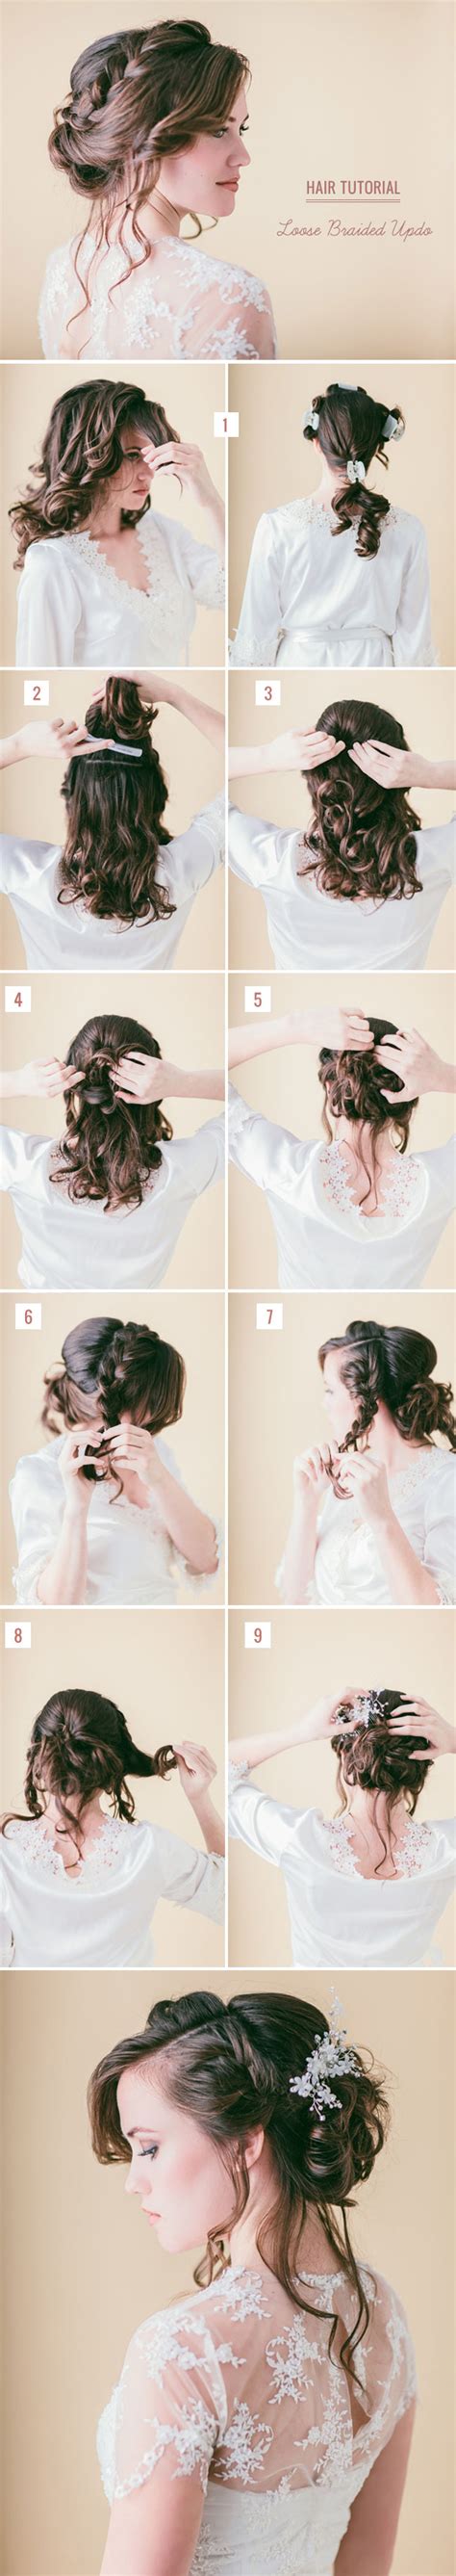 diy wedding hairstyles  tutorials tulle chantilly